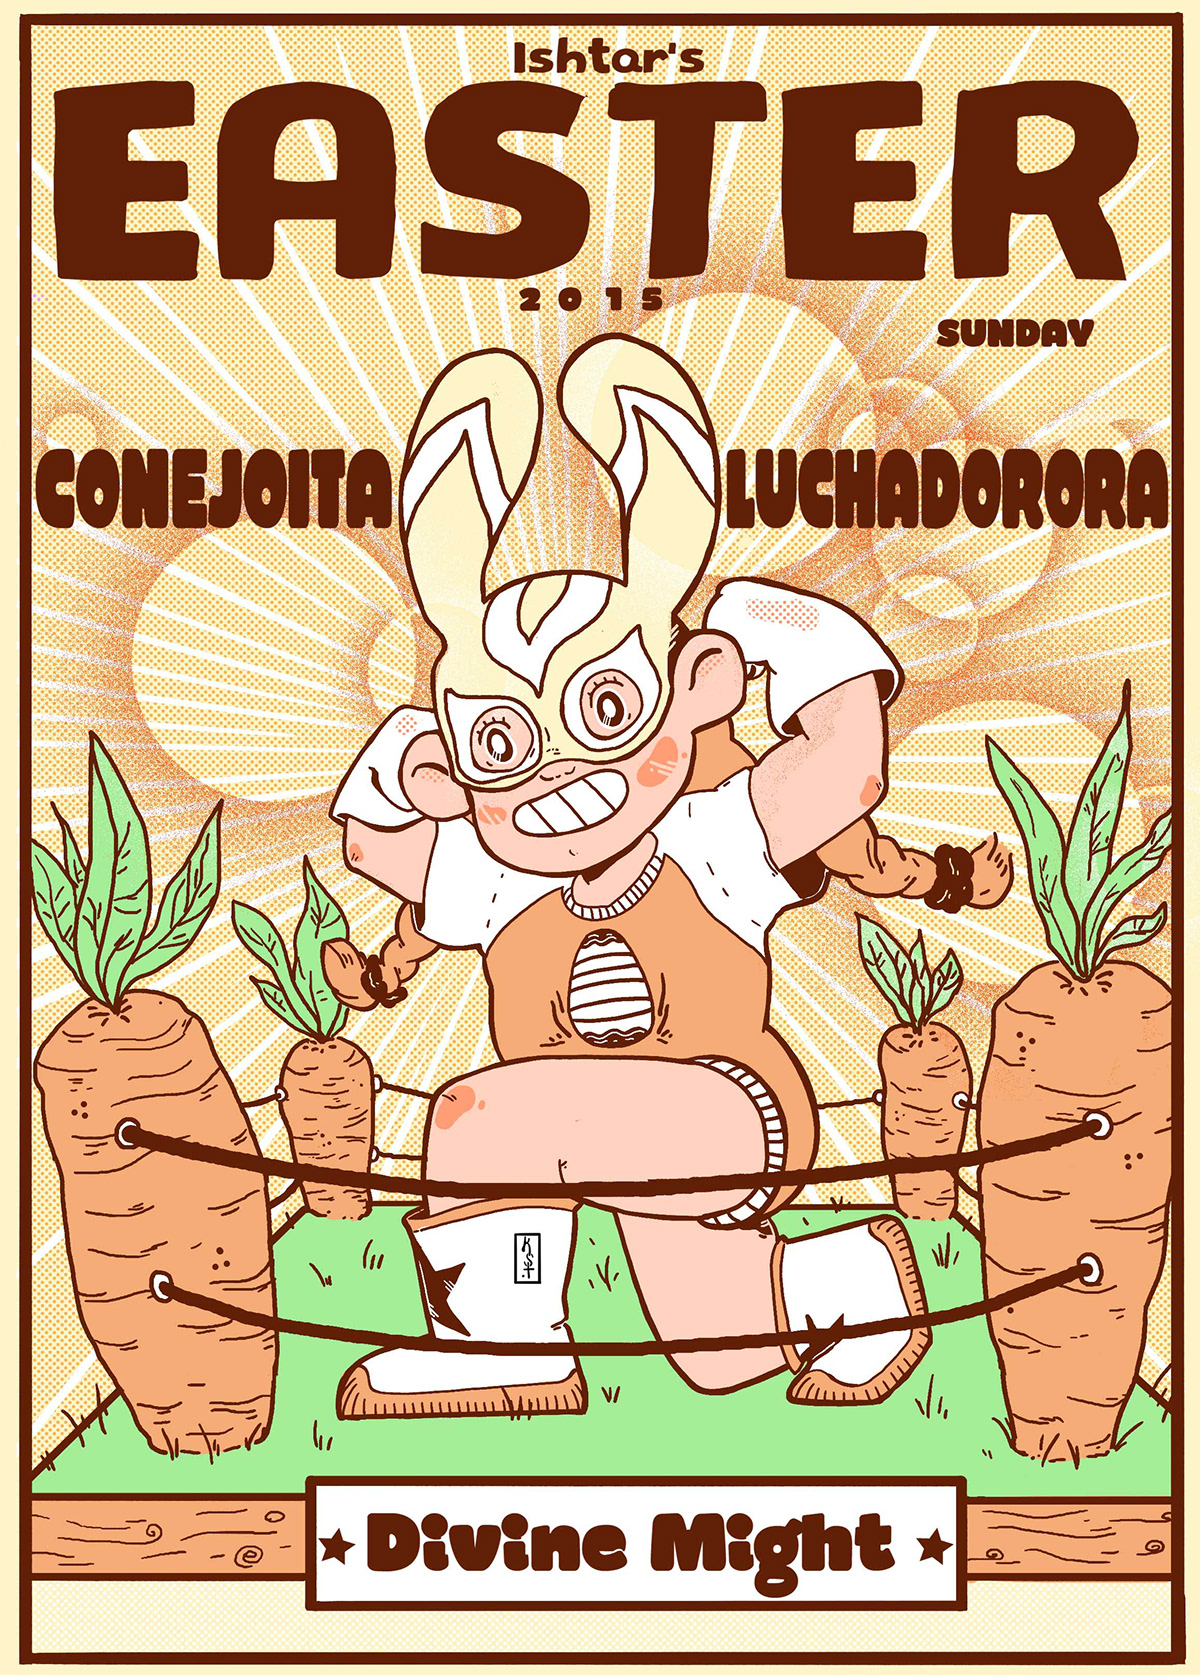 children's illustration poster luchador